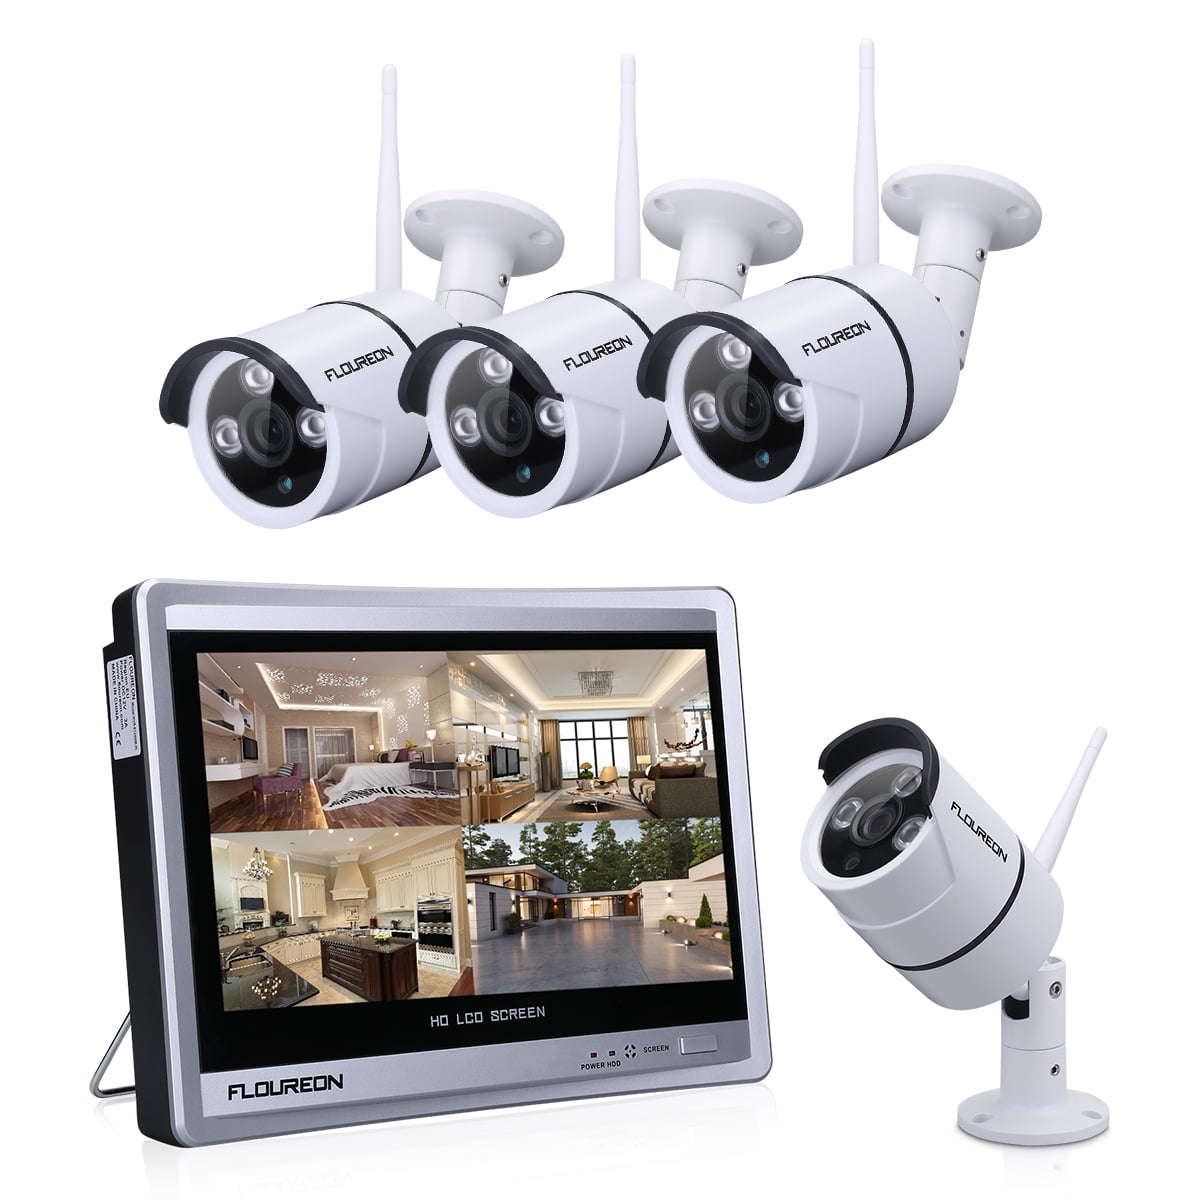 12 camera wireless surveillance system